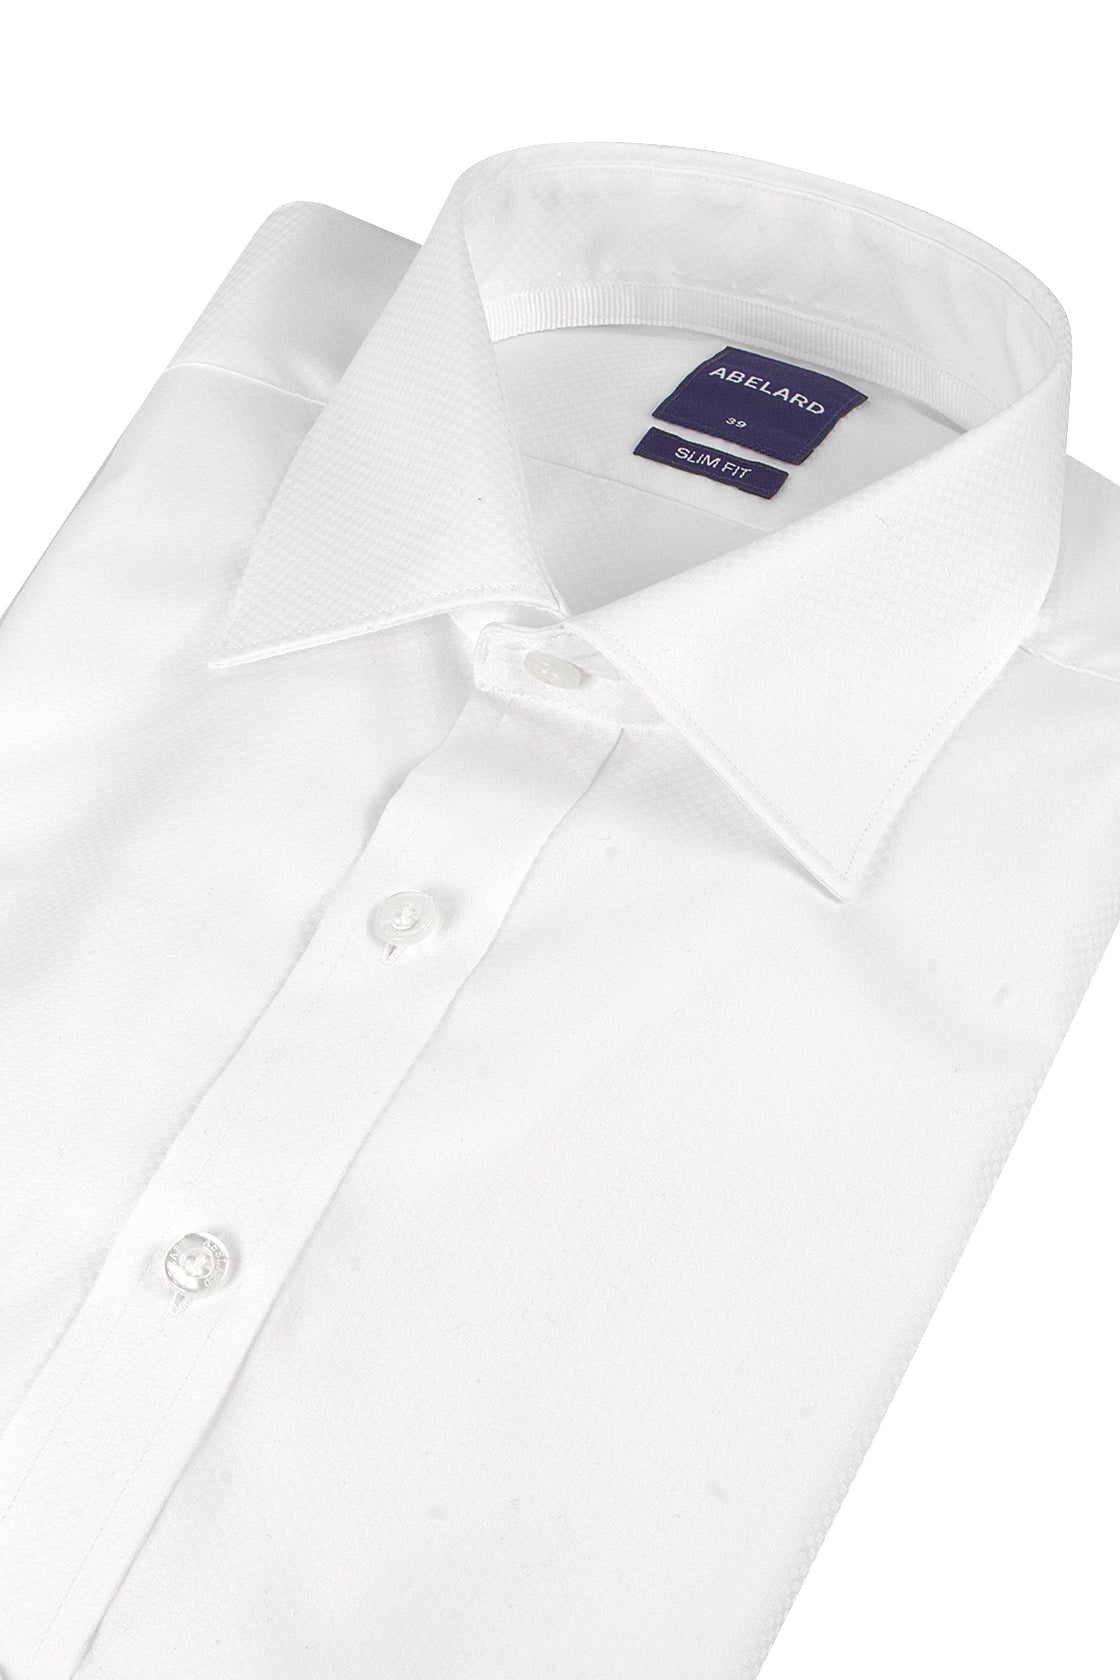 Abelard Cetana Micro-Check Slim Shirt White